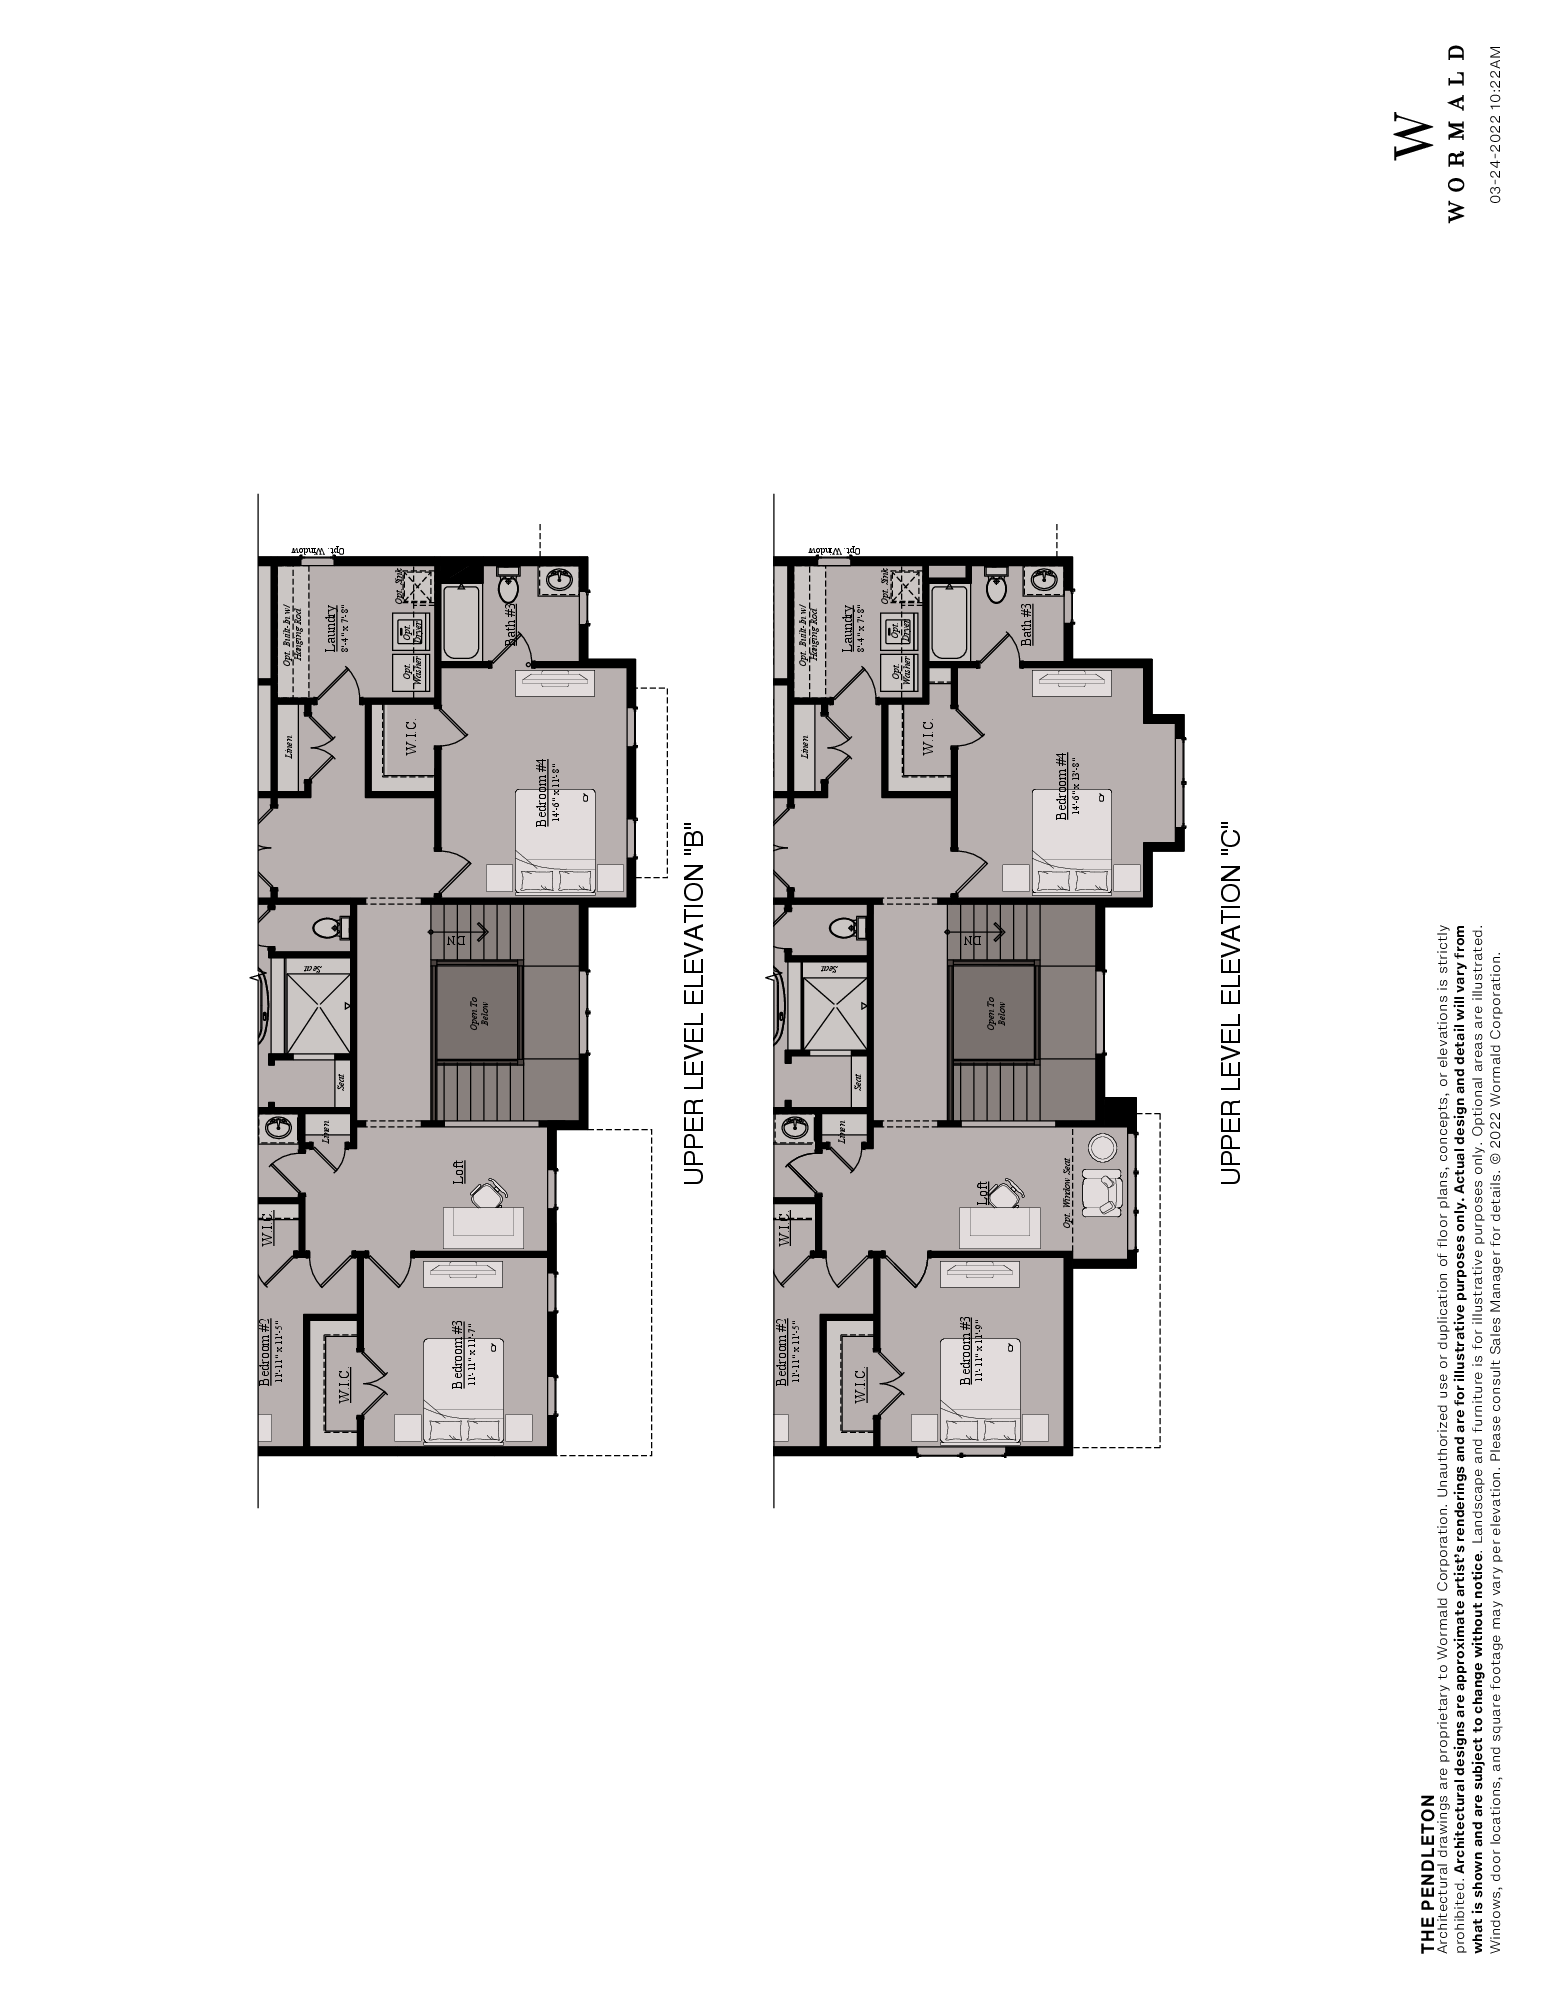 The Pendleton floor plan 4